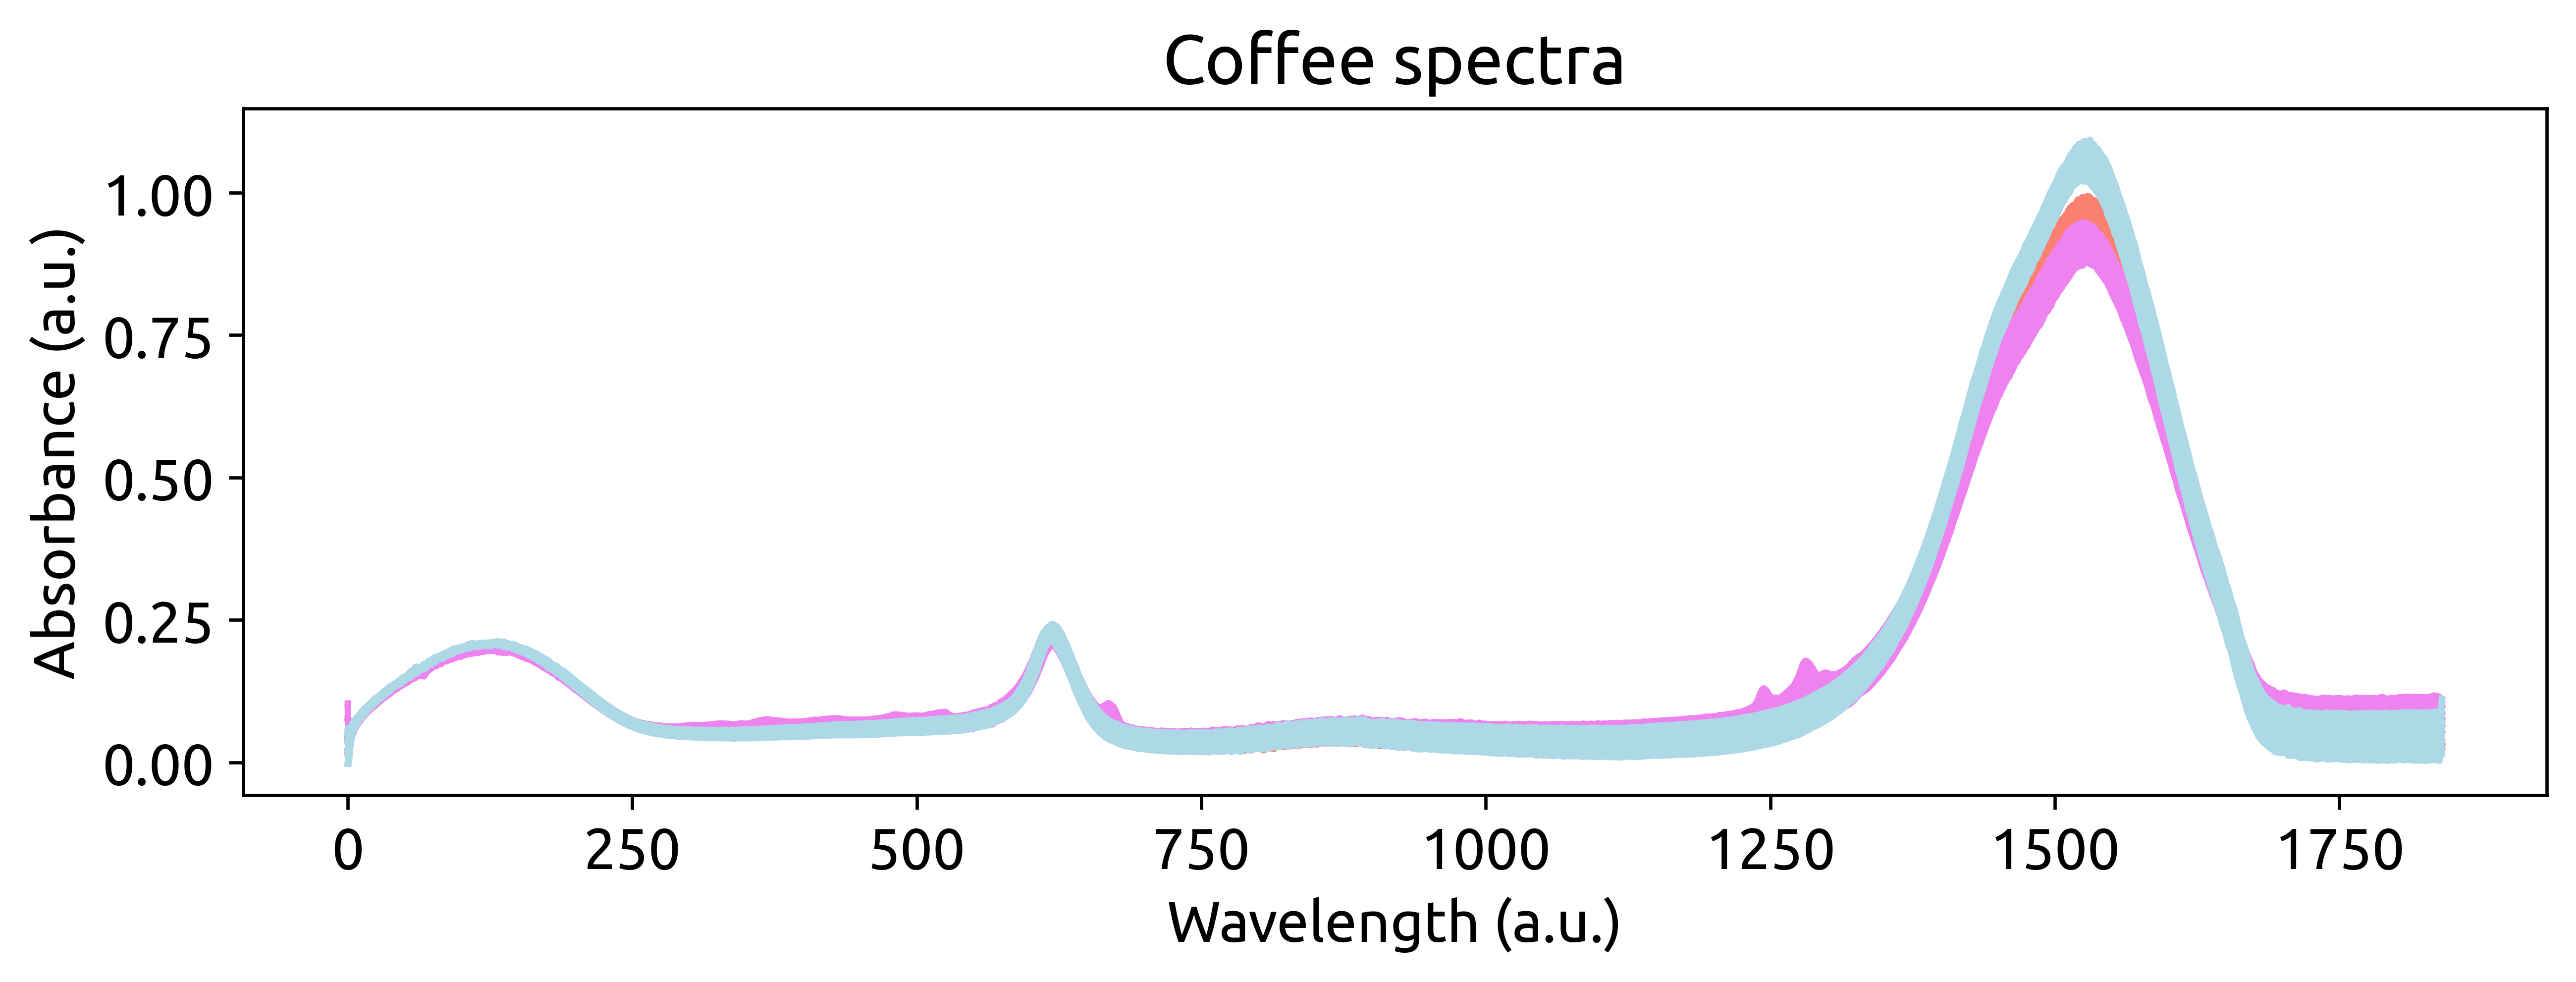 Coffee spectra